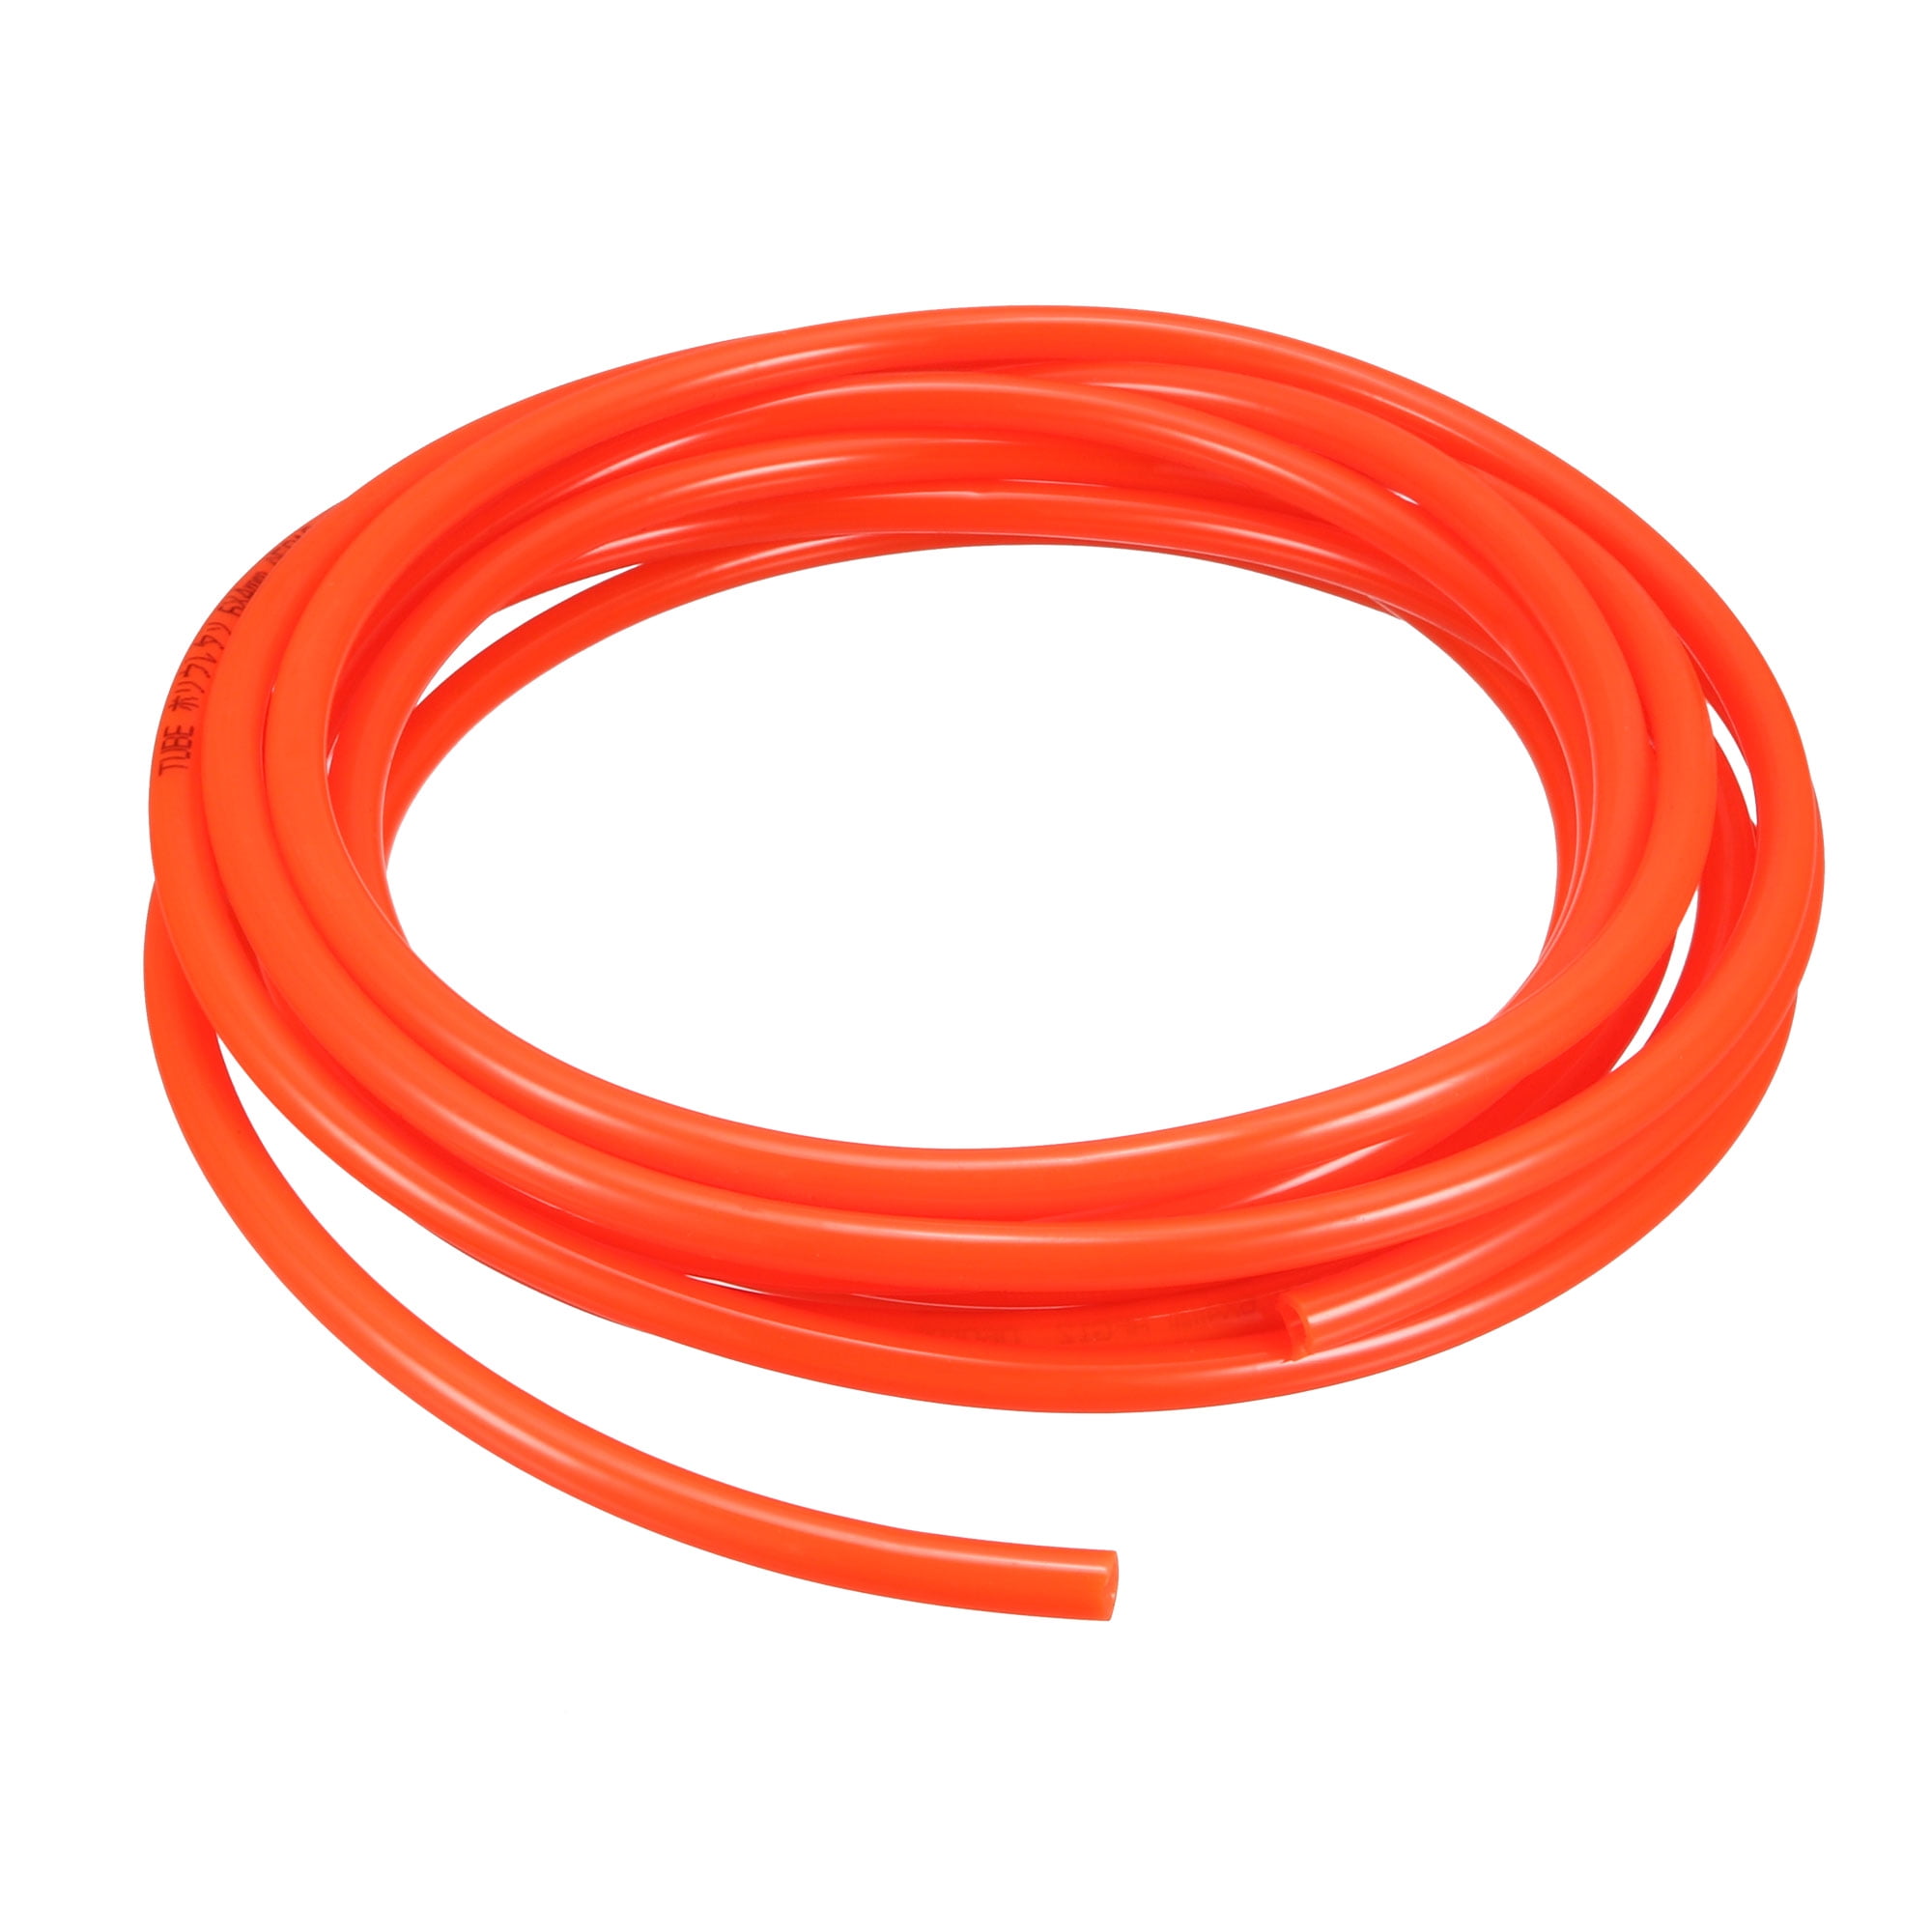 PU Air Tubing Pipe Hose 5m Orange Color x 2.5 OD ID 4mm 